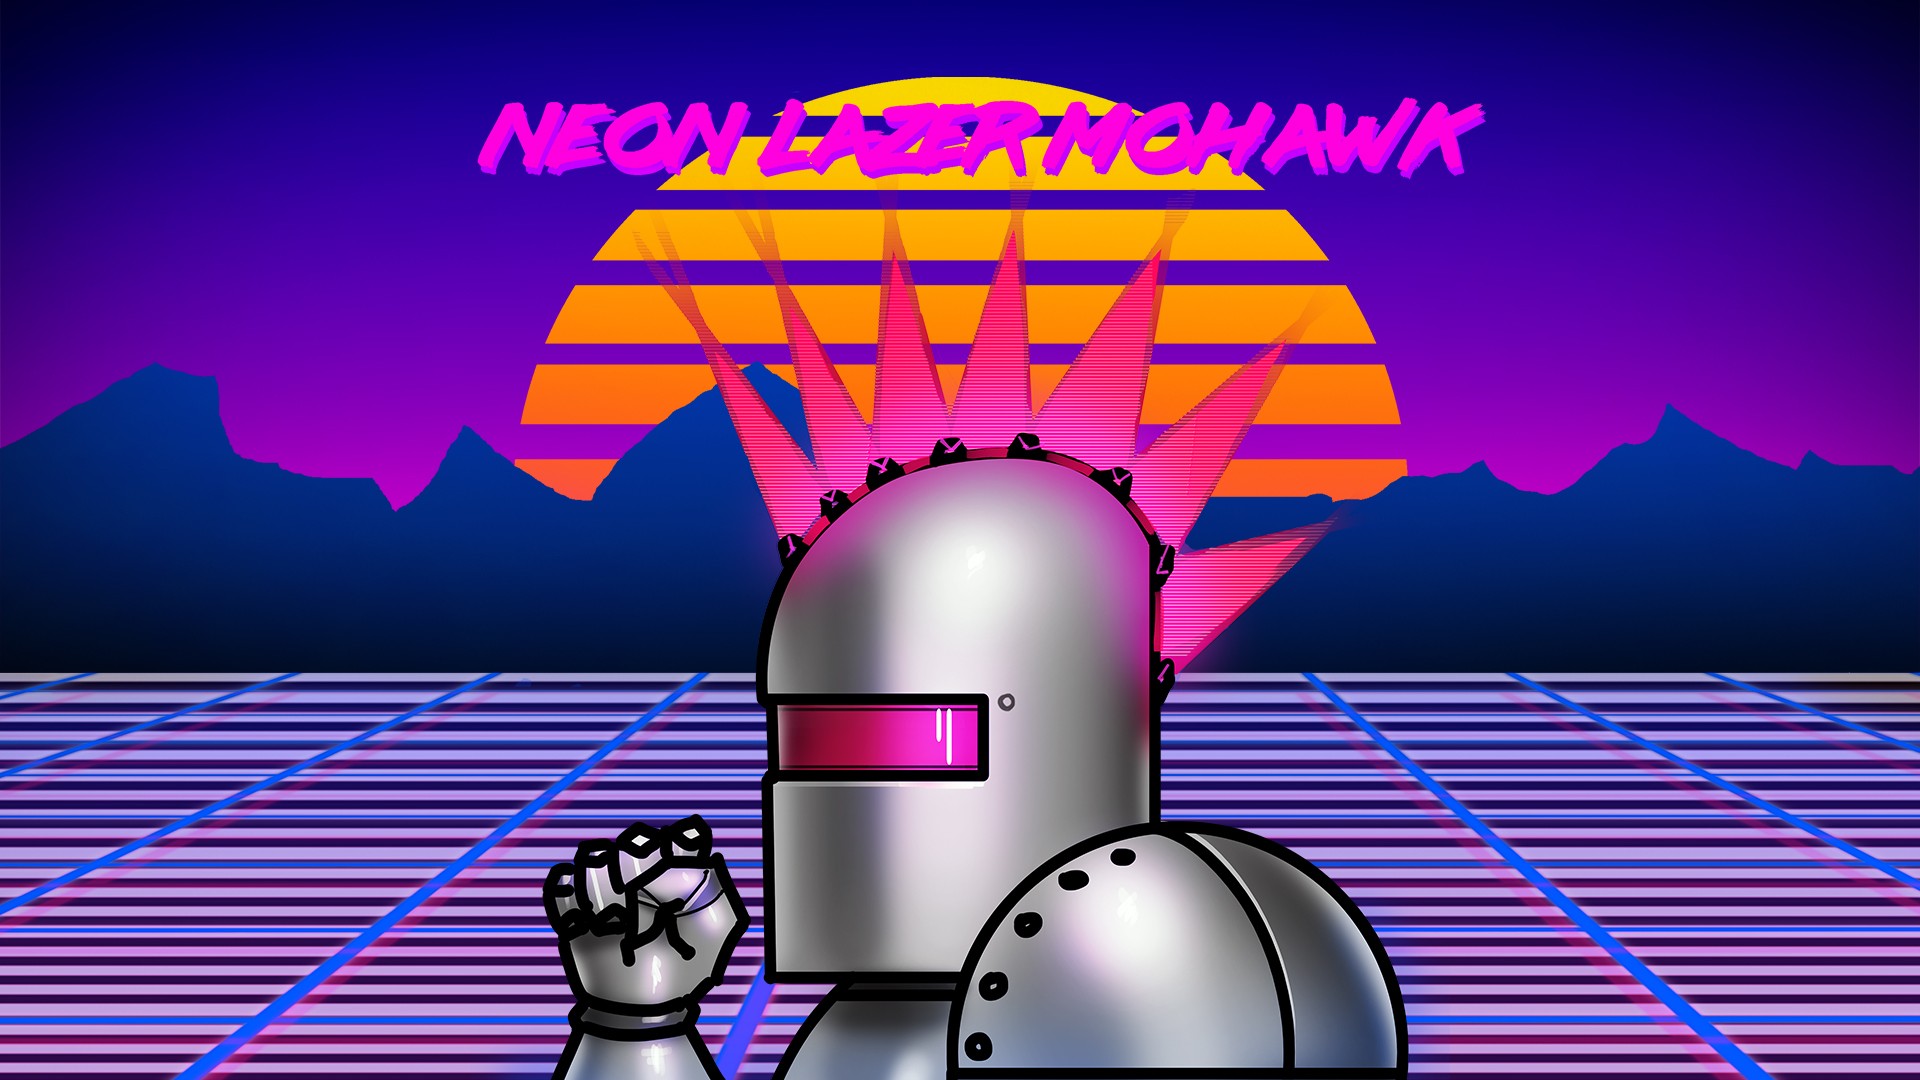 General 1920x1080 Neon Lazer Mohawk 1980s retro games robot grid digital art sunset Sun colorful text New Retro Wave synthwave Digital Grid CGI neon